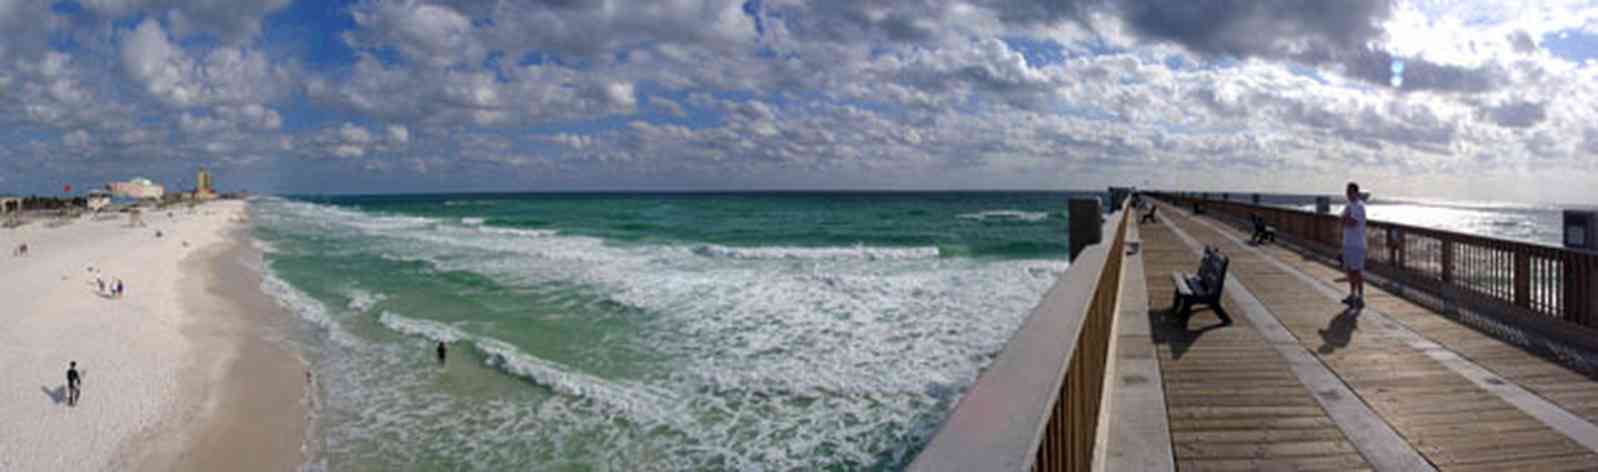 Pensacola-Beach:-Gulf-Fishing-Pier_06.jpg:  pier, dock, gulf of mexico, beach, surfer, waves, dock